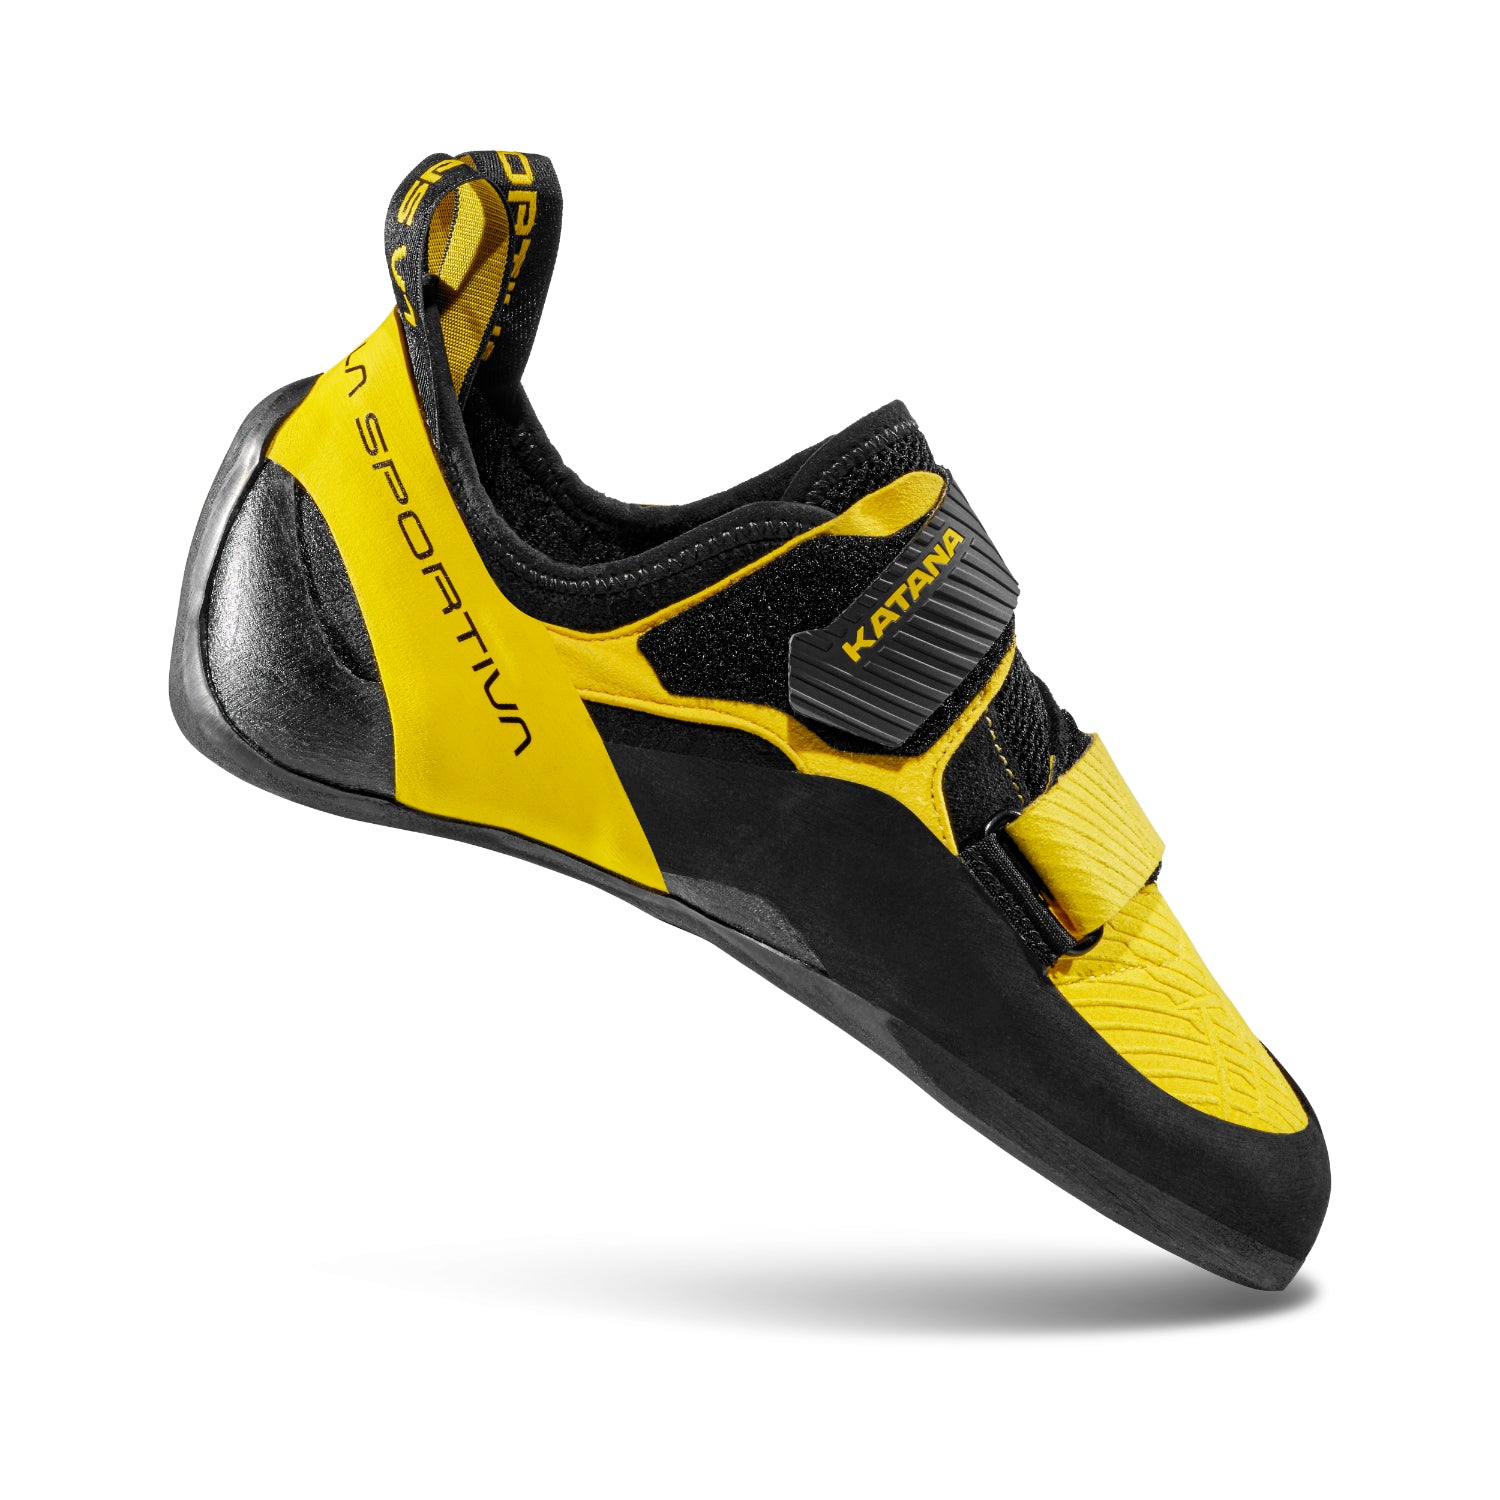 La Sportiva Katana black and yellow with p3 system